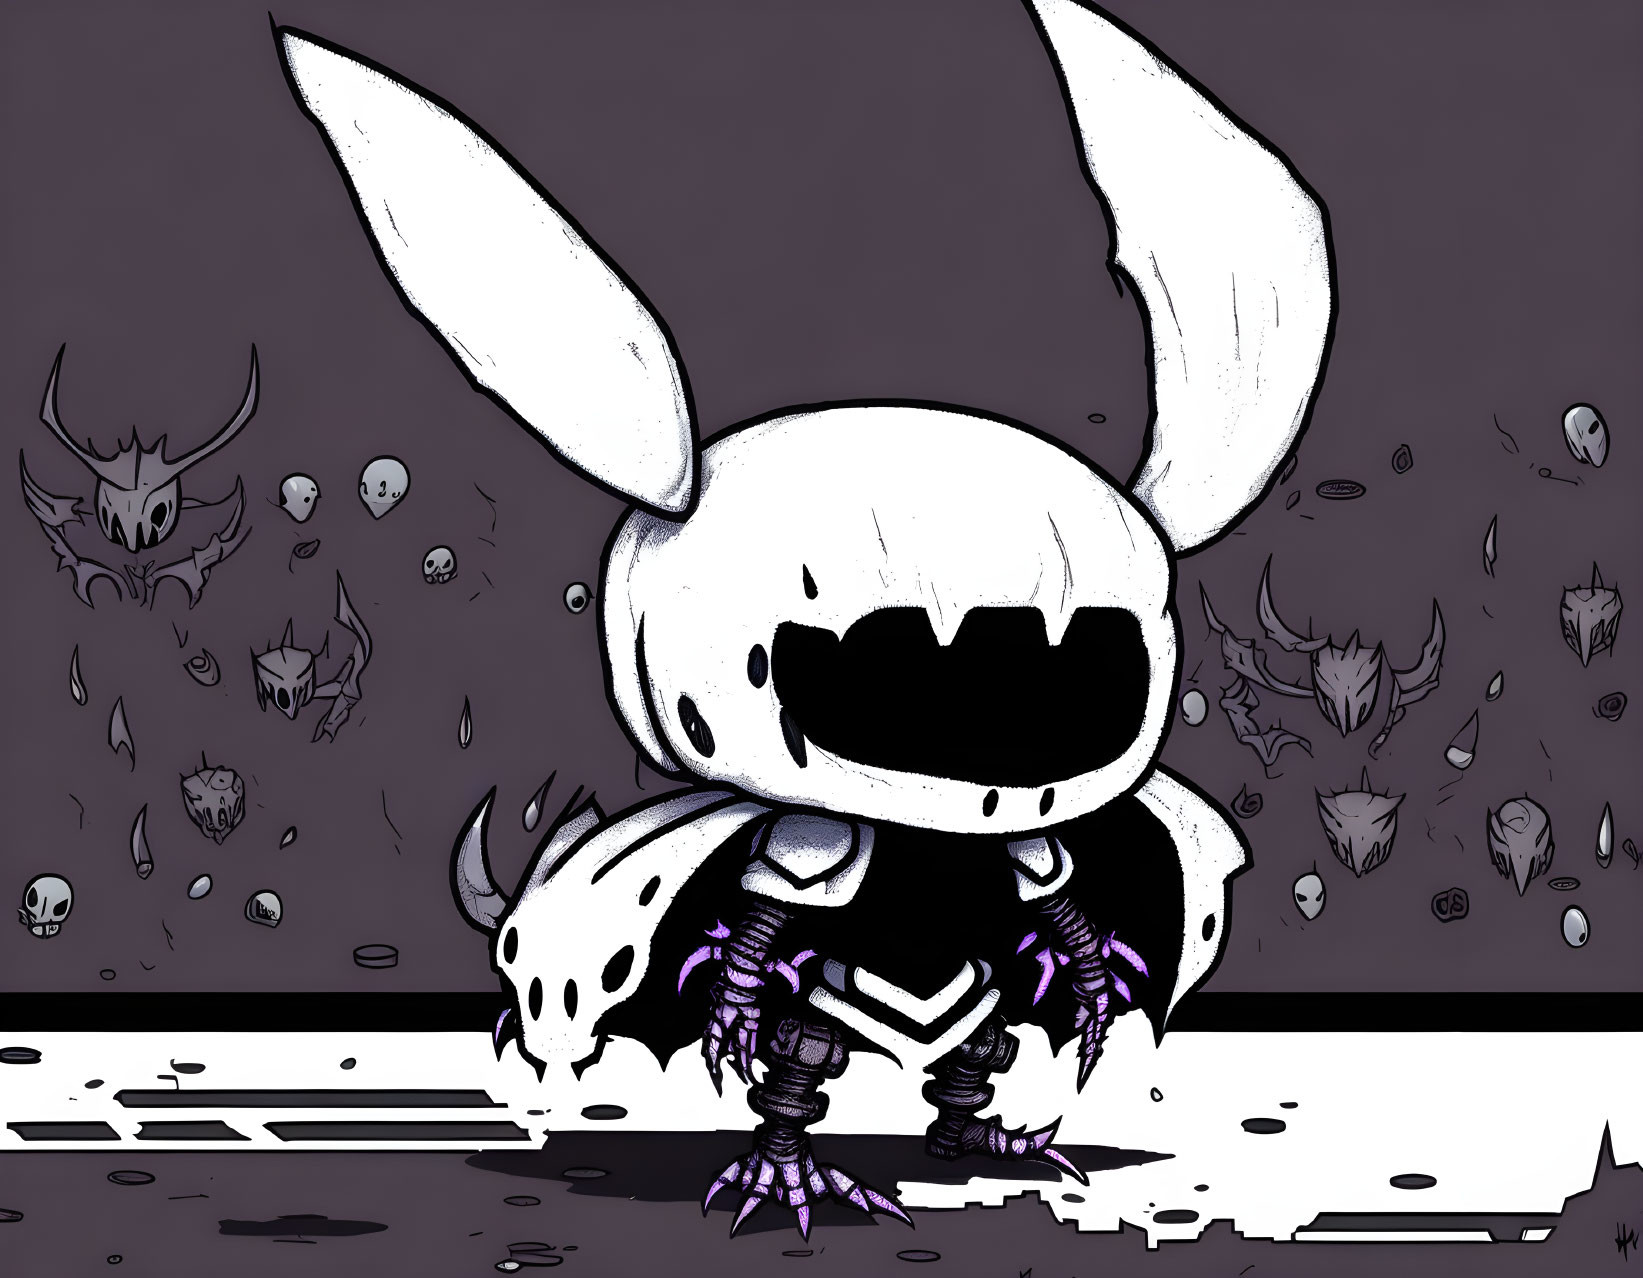 Monochrome illustration of menacing rabbit creature with skulls and symbols